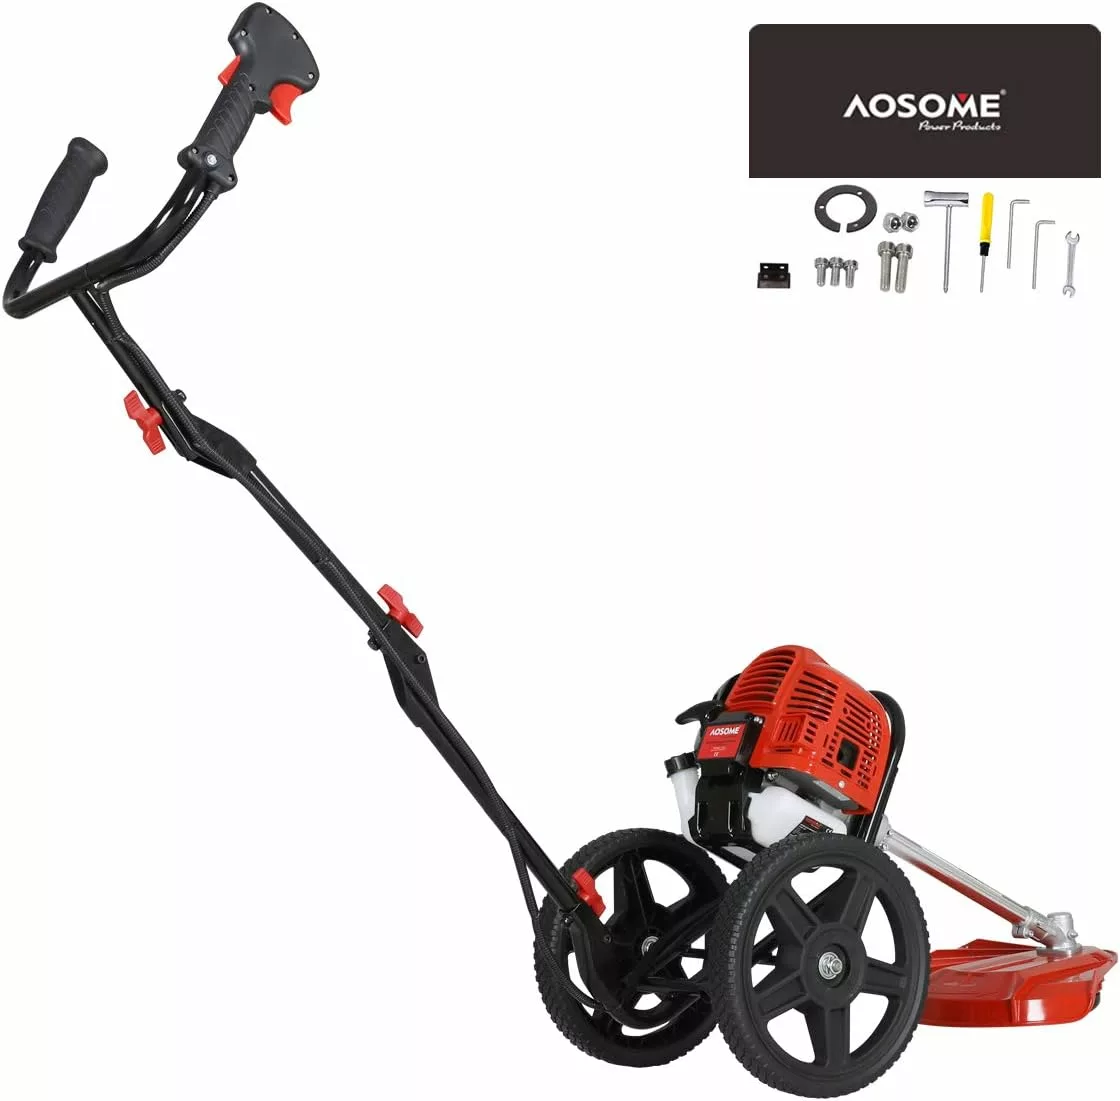 AOSOME ASWBC520 2 Stroke 52cc Petrol Wheeled Grass Trimmer, Garden Brush Cutter, 1.4kw